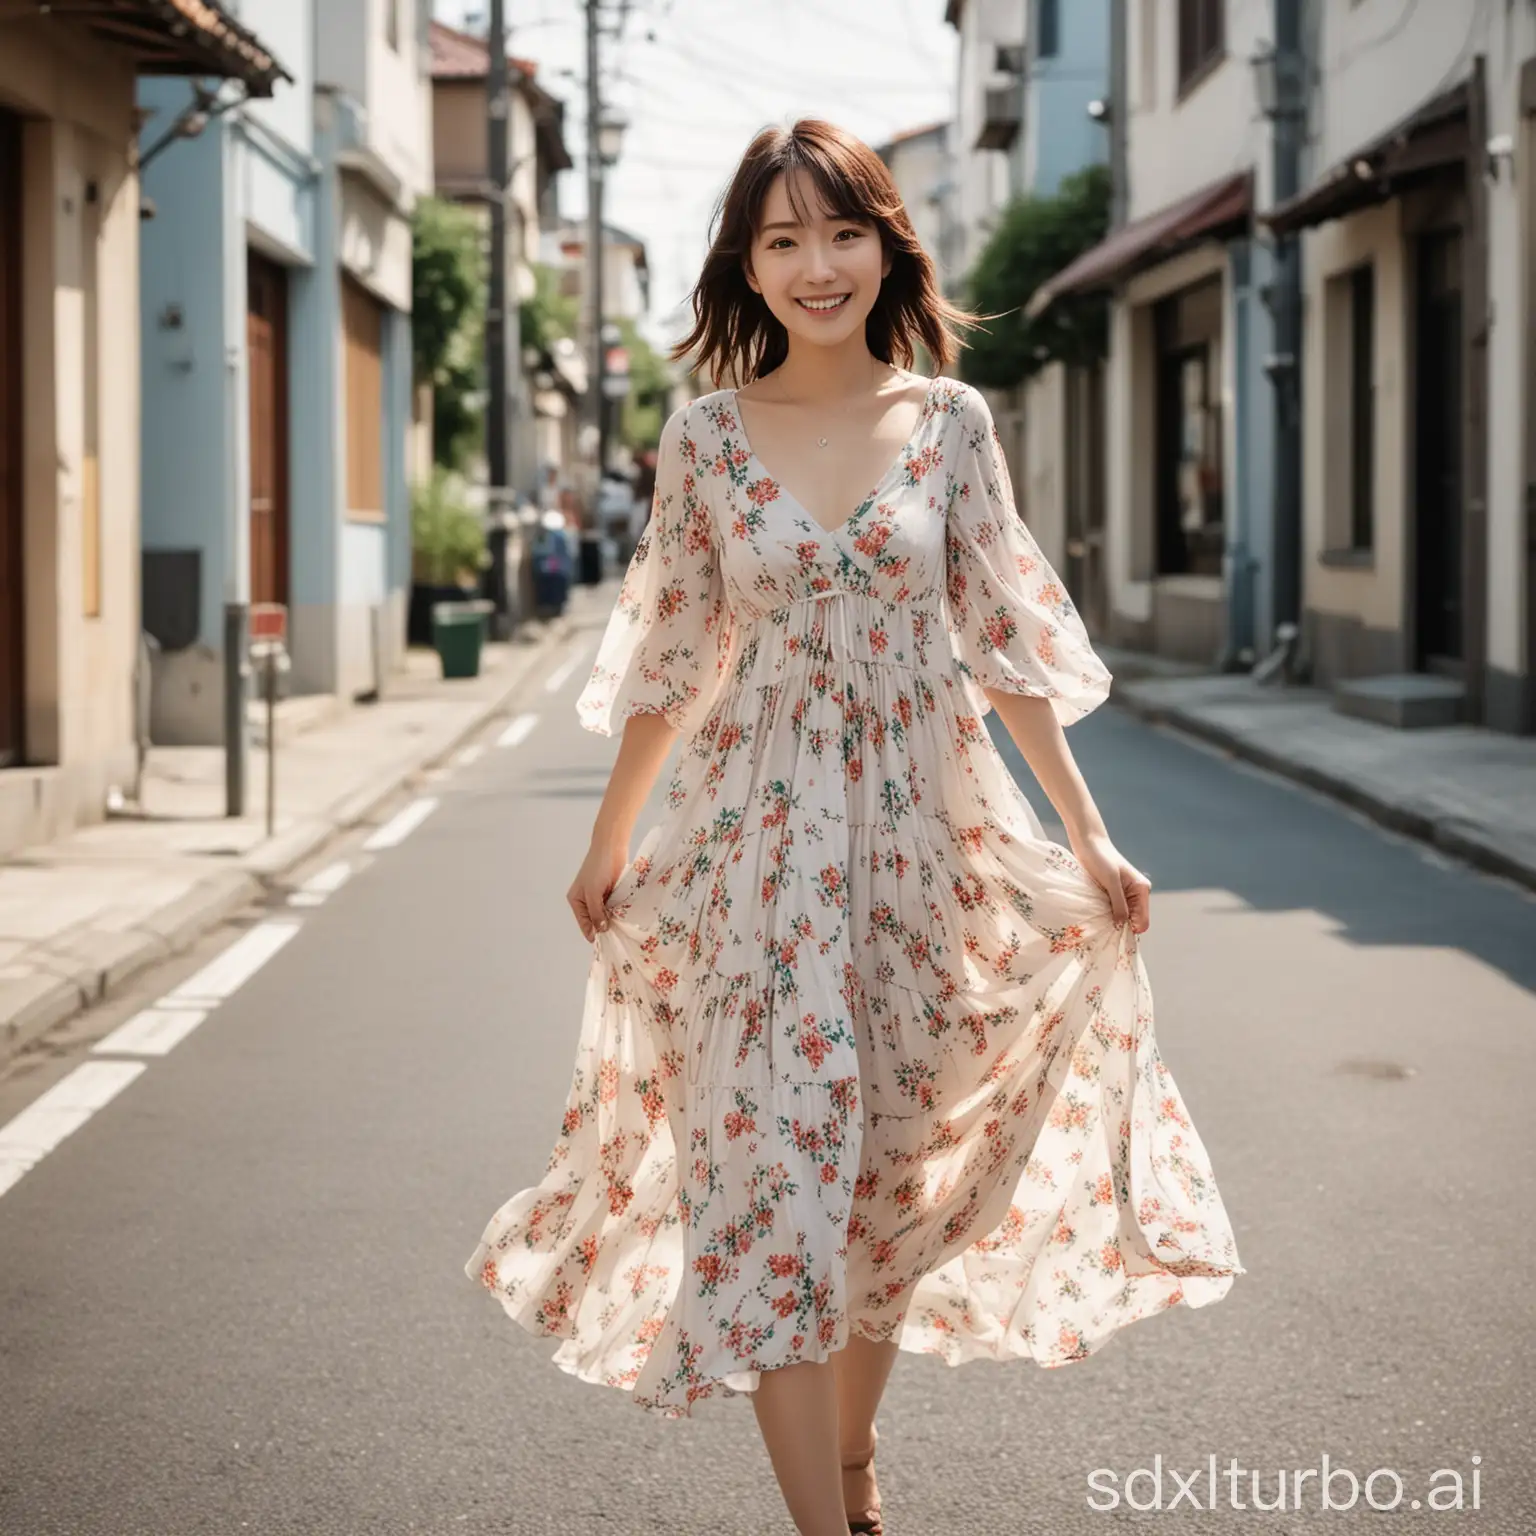 Aragaki Yui  walking down the street, wearing a flowing summer dress. Smiling. realistic photo